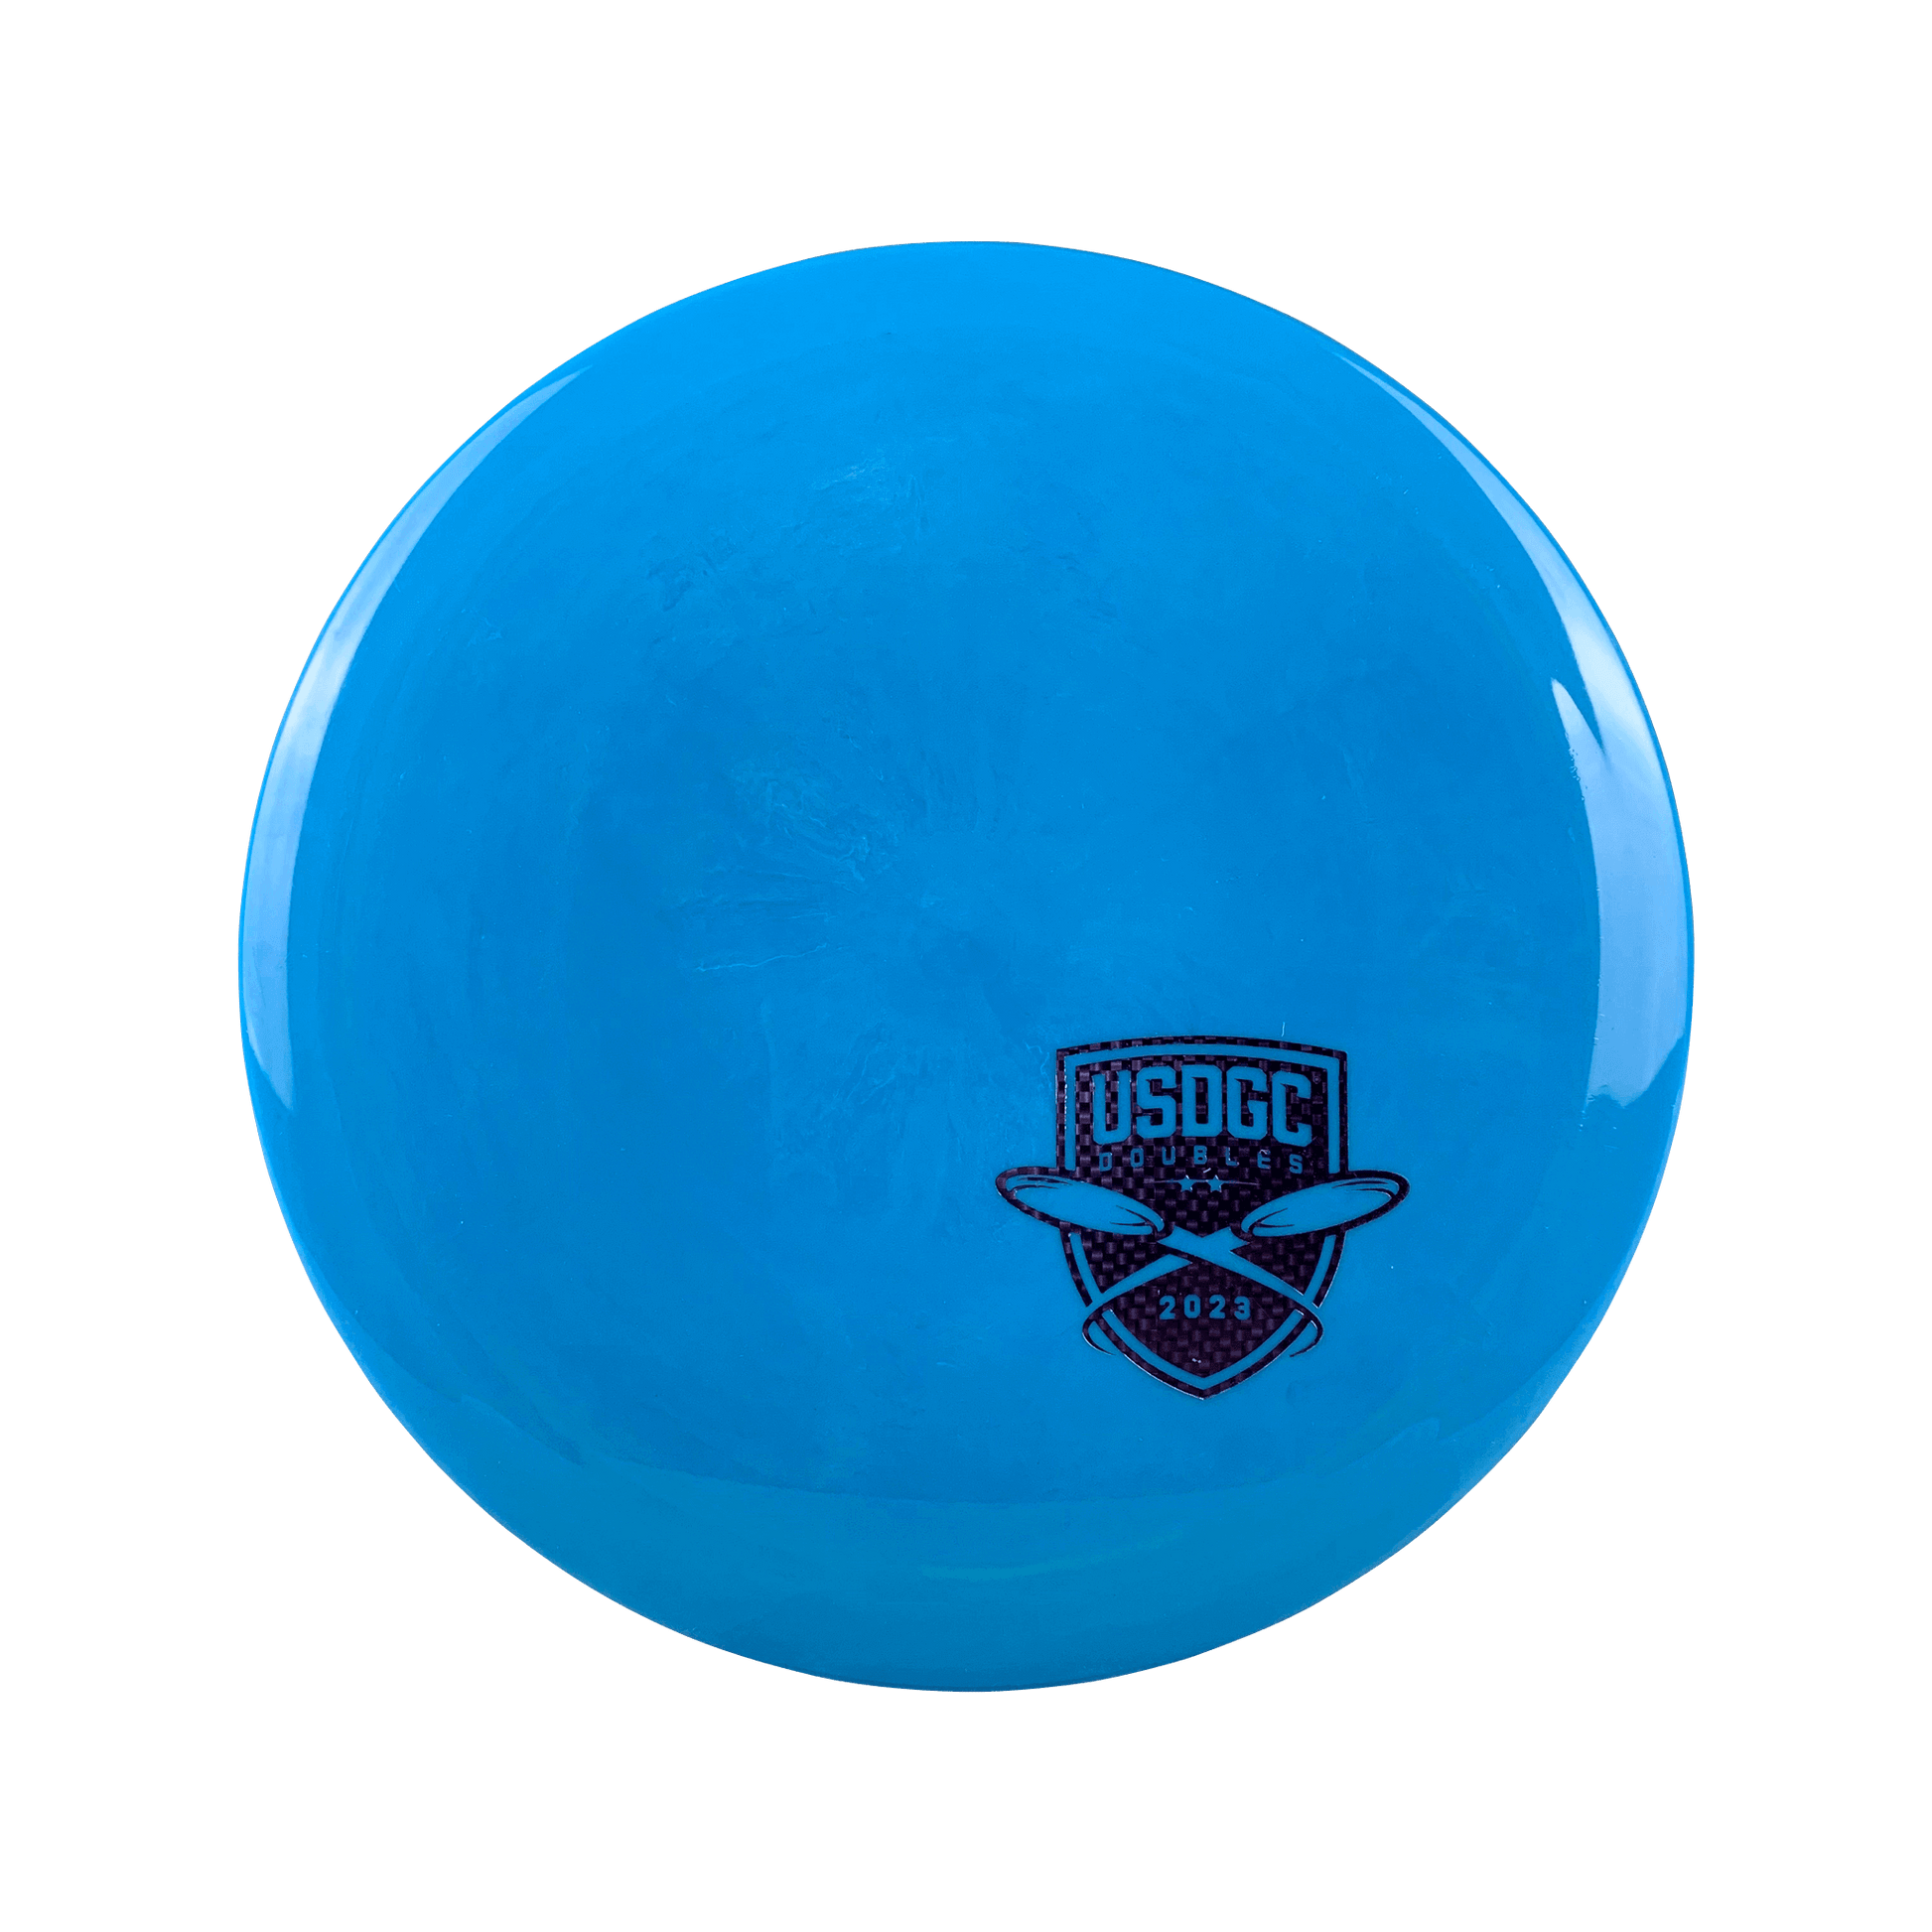 Star TL - USDGC Doubles Disc Innova blue 170 